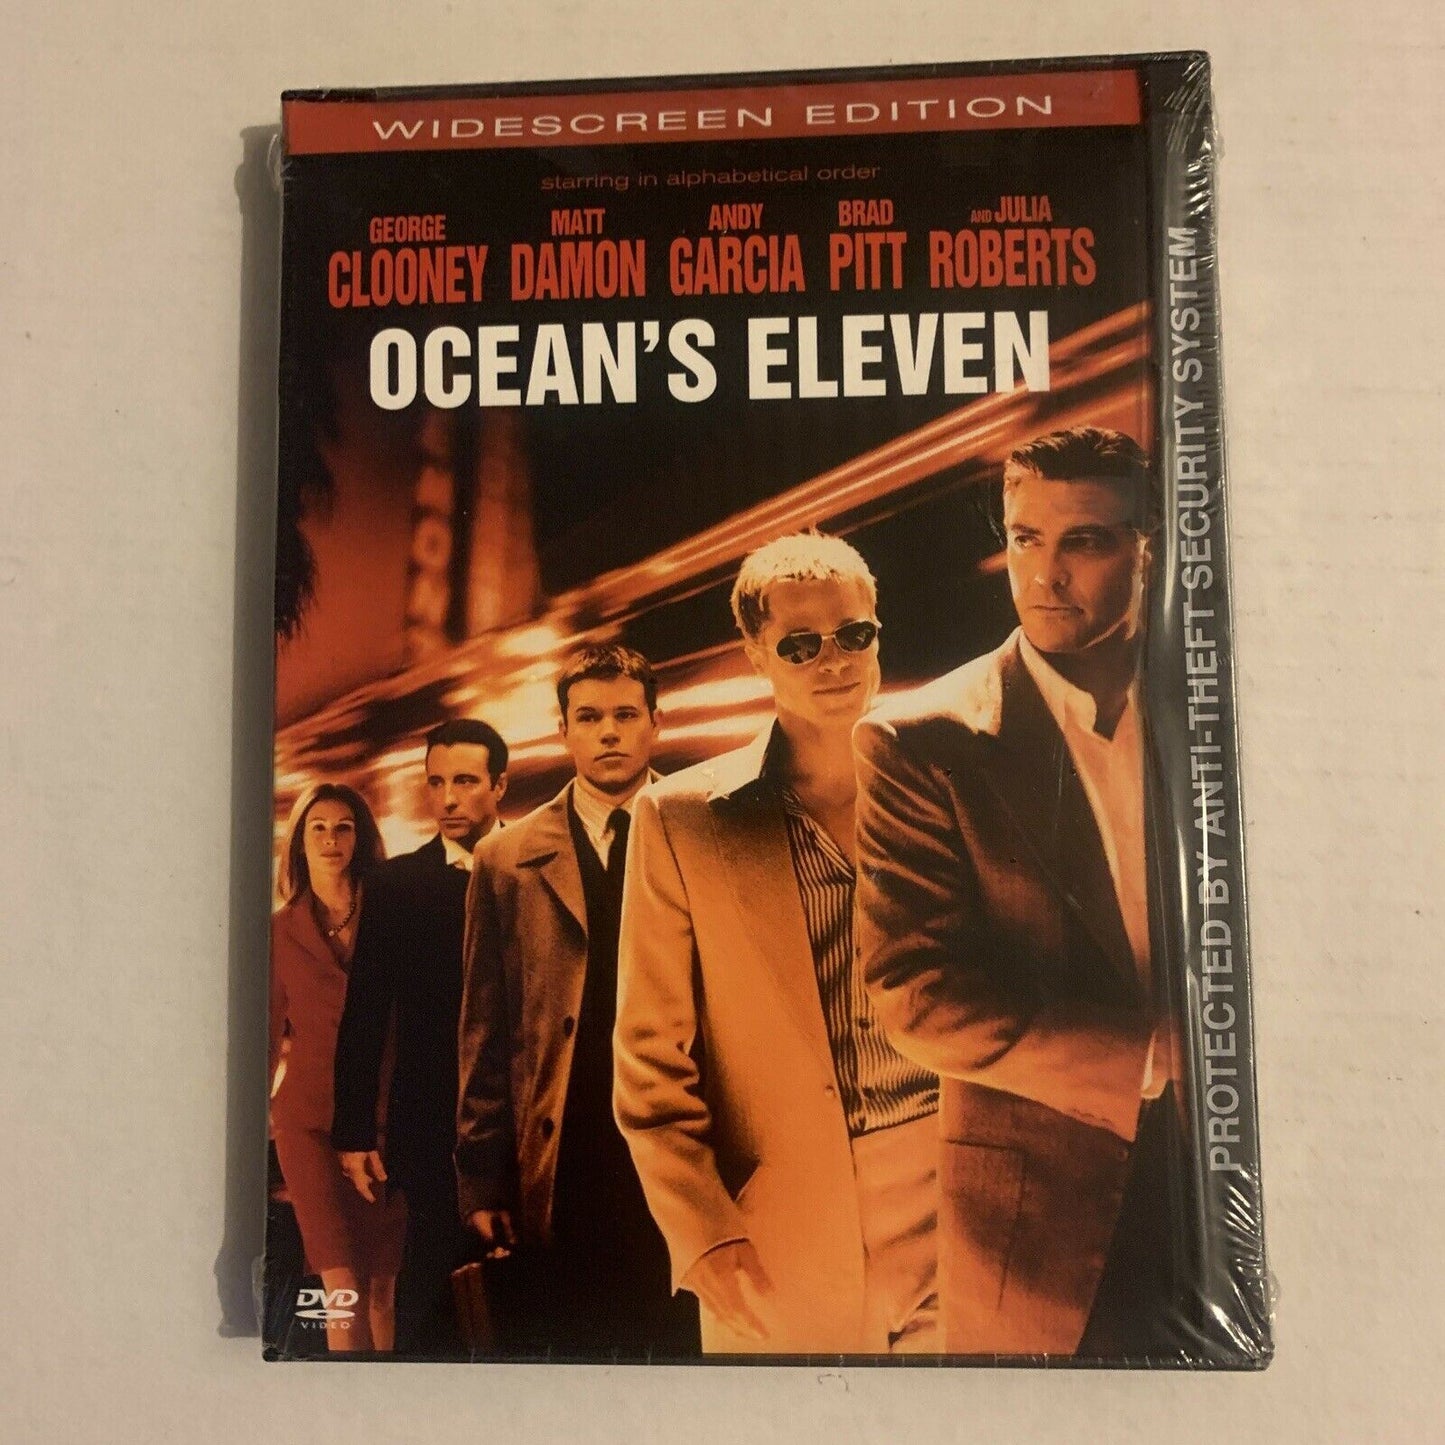 *New Sealed* Ocean's Eleven (DVD, 2001) George Clooney, Brad Pitt. Region 1